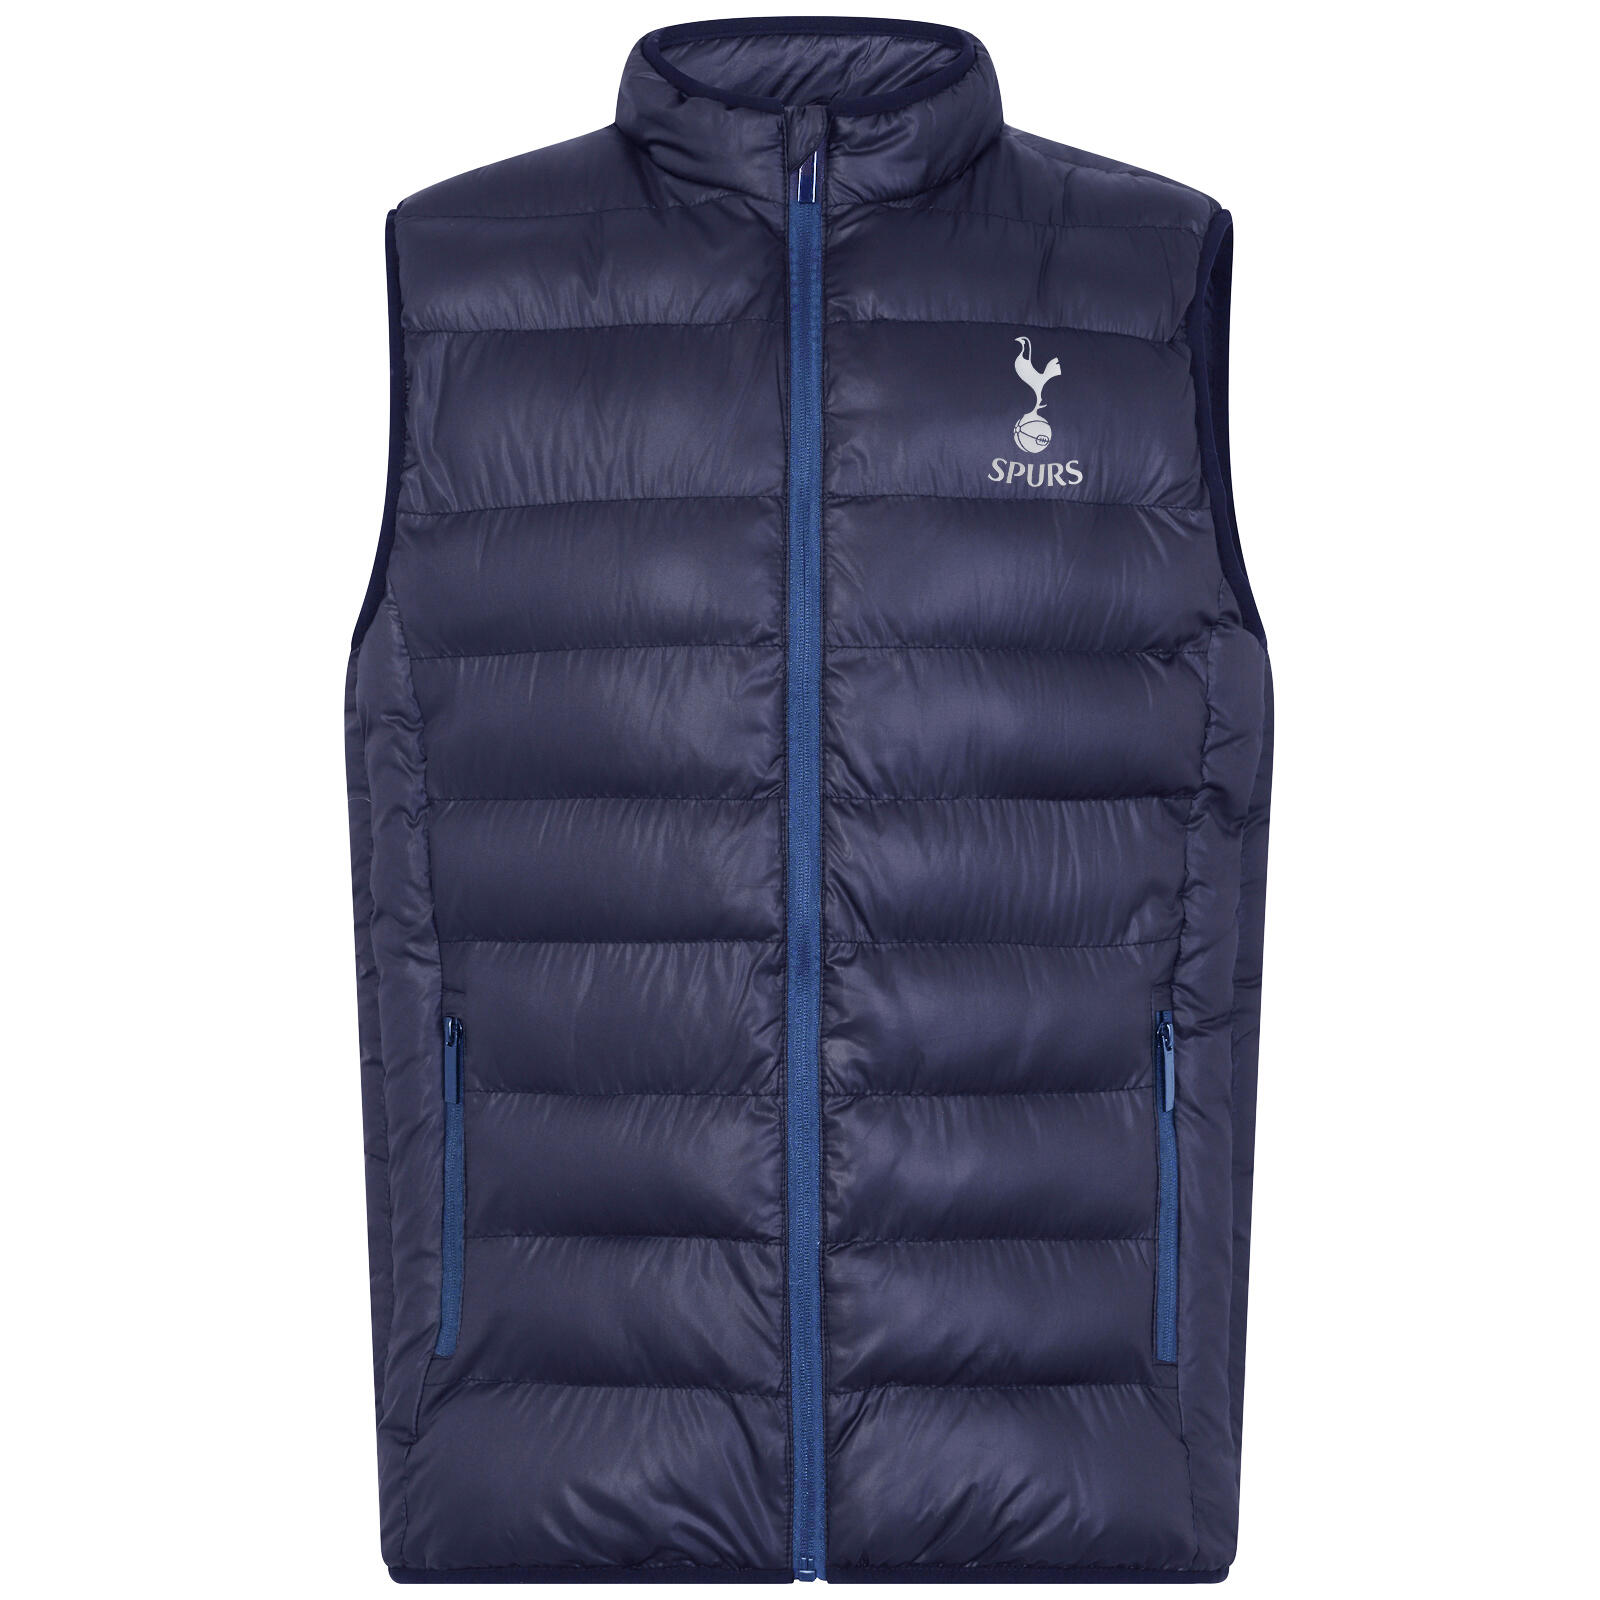 TOTTENHAM HOTSPUR Tottenham Hotspur Boys Gilet Jacket Body Warmer Padded Kids OFFICIAL Gift